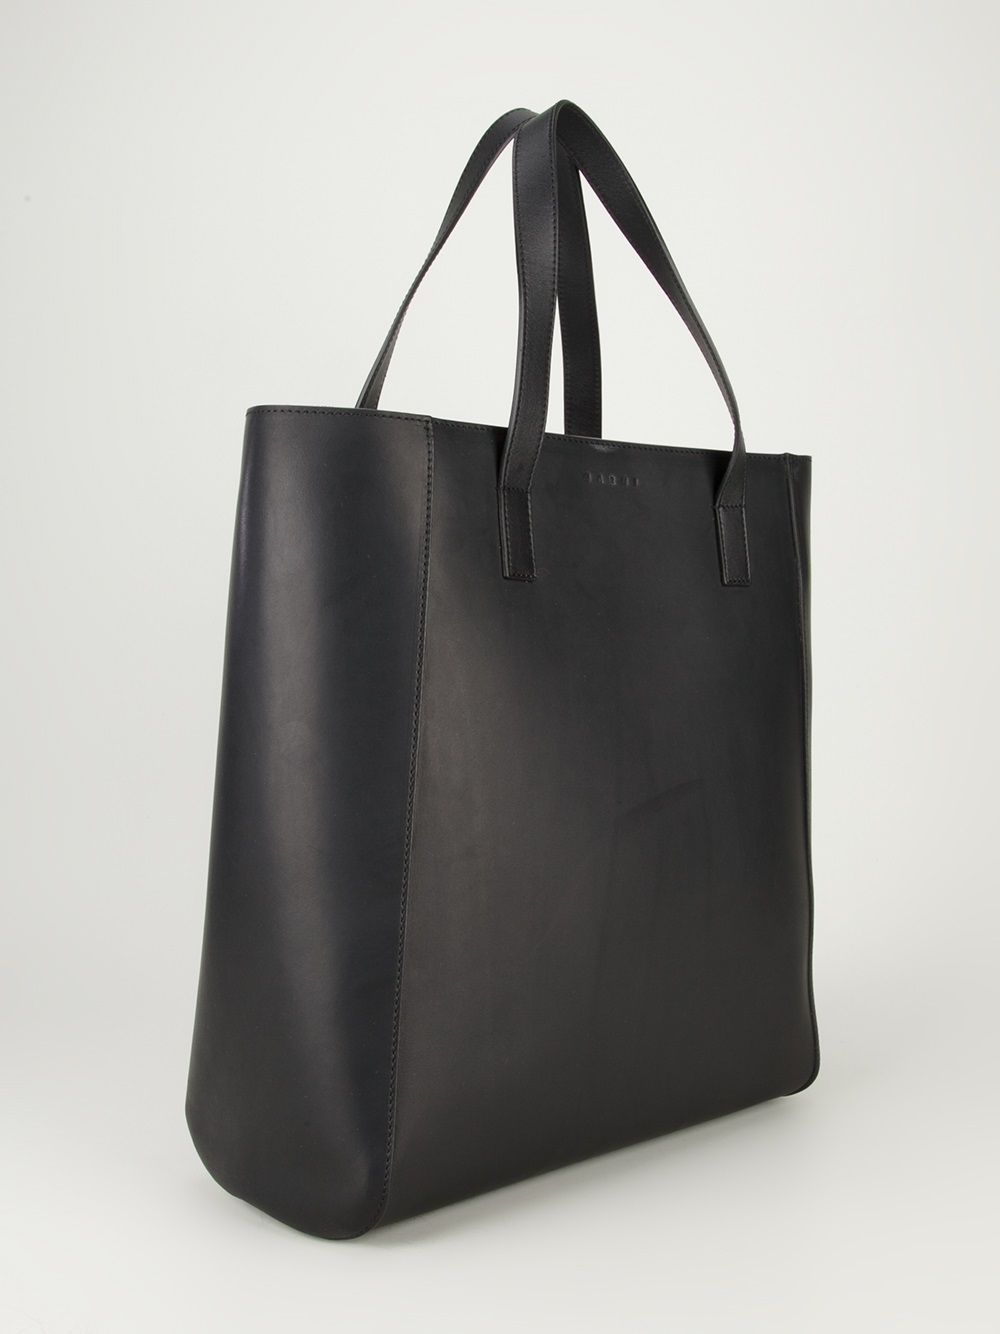 Marni Tote Bag in Black - Lyst